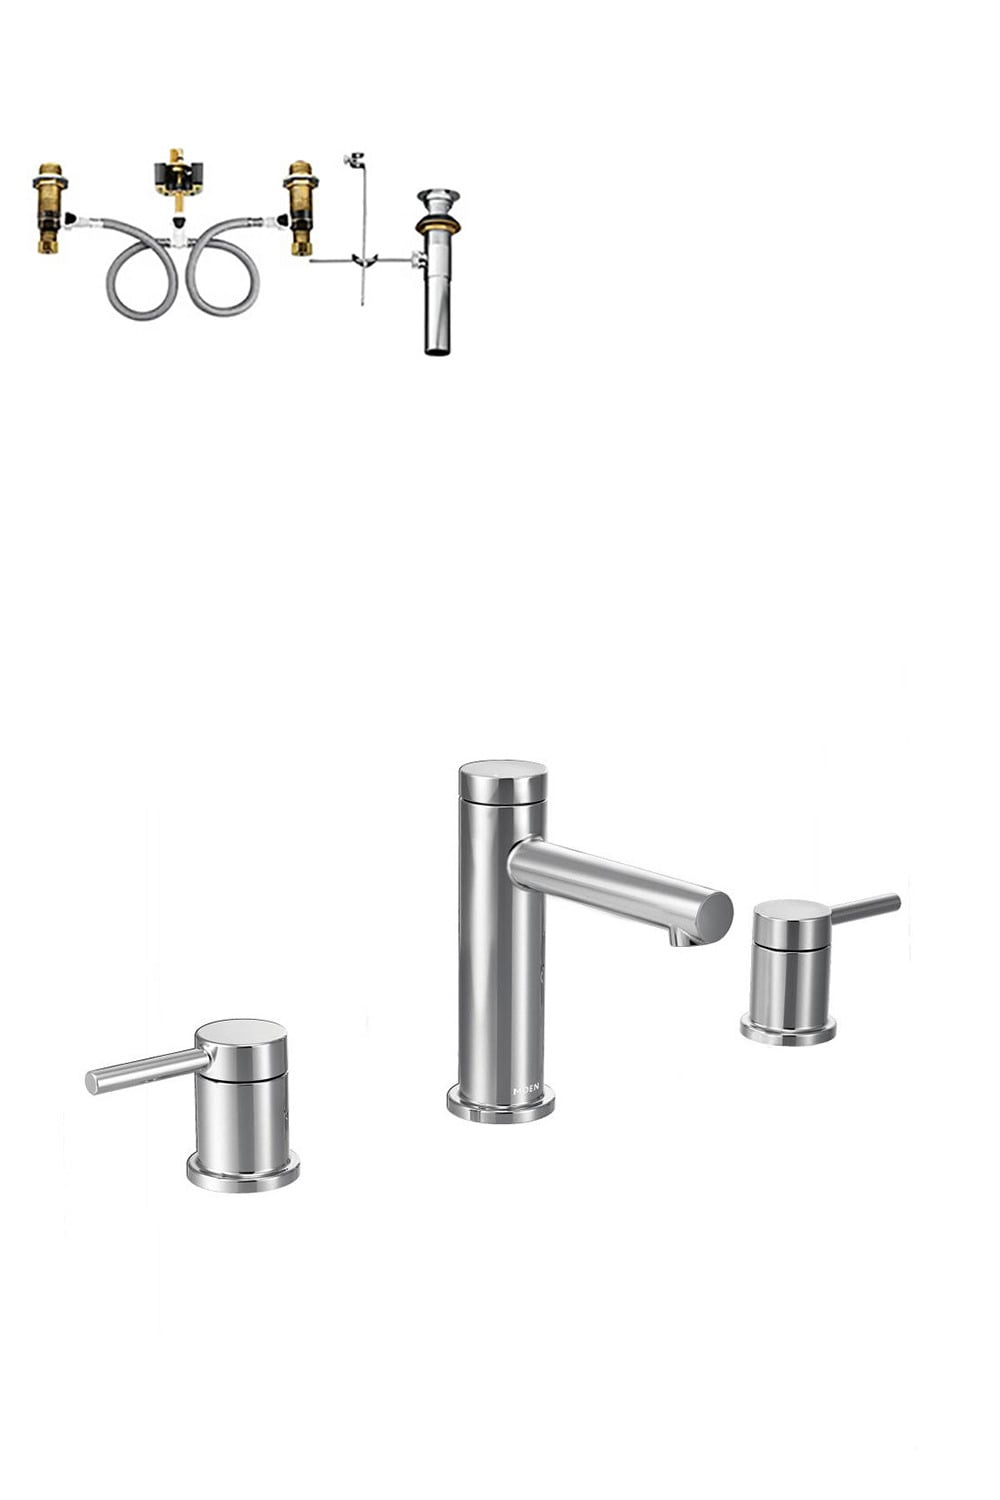 Align Polished Chrome Widespread 2-handle WaterSense Bathroom Sink Faucet | - Moen T6193-9000-L